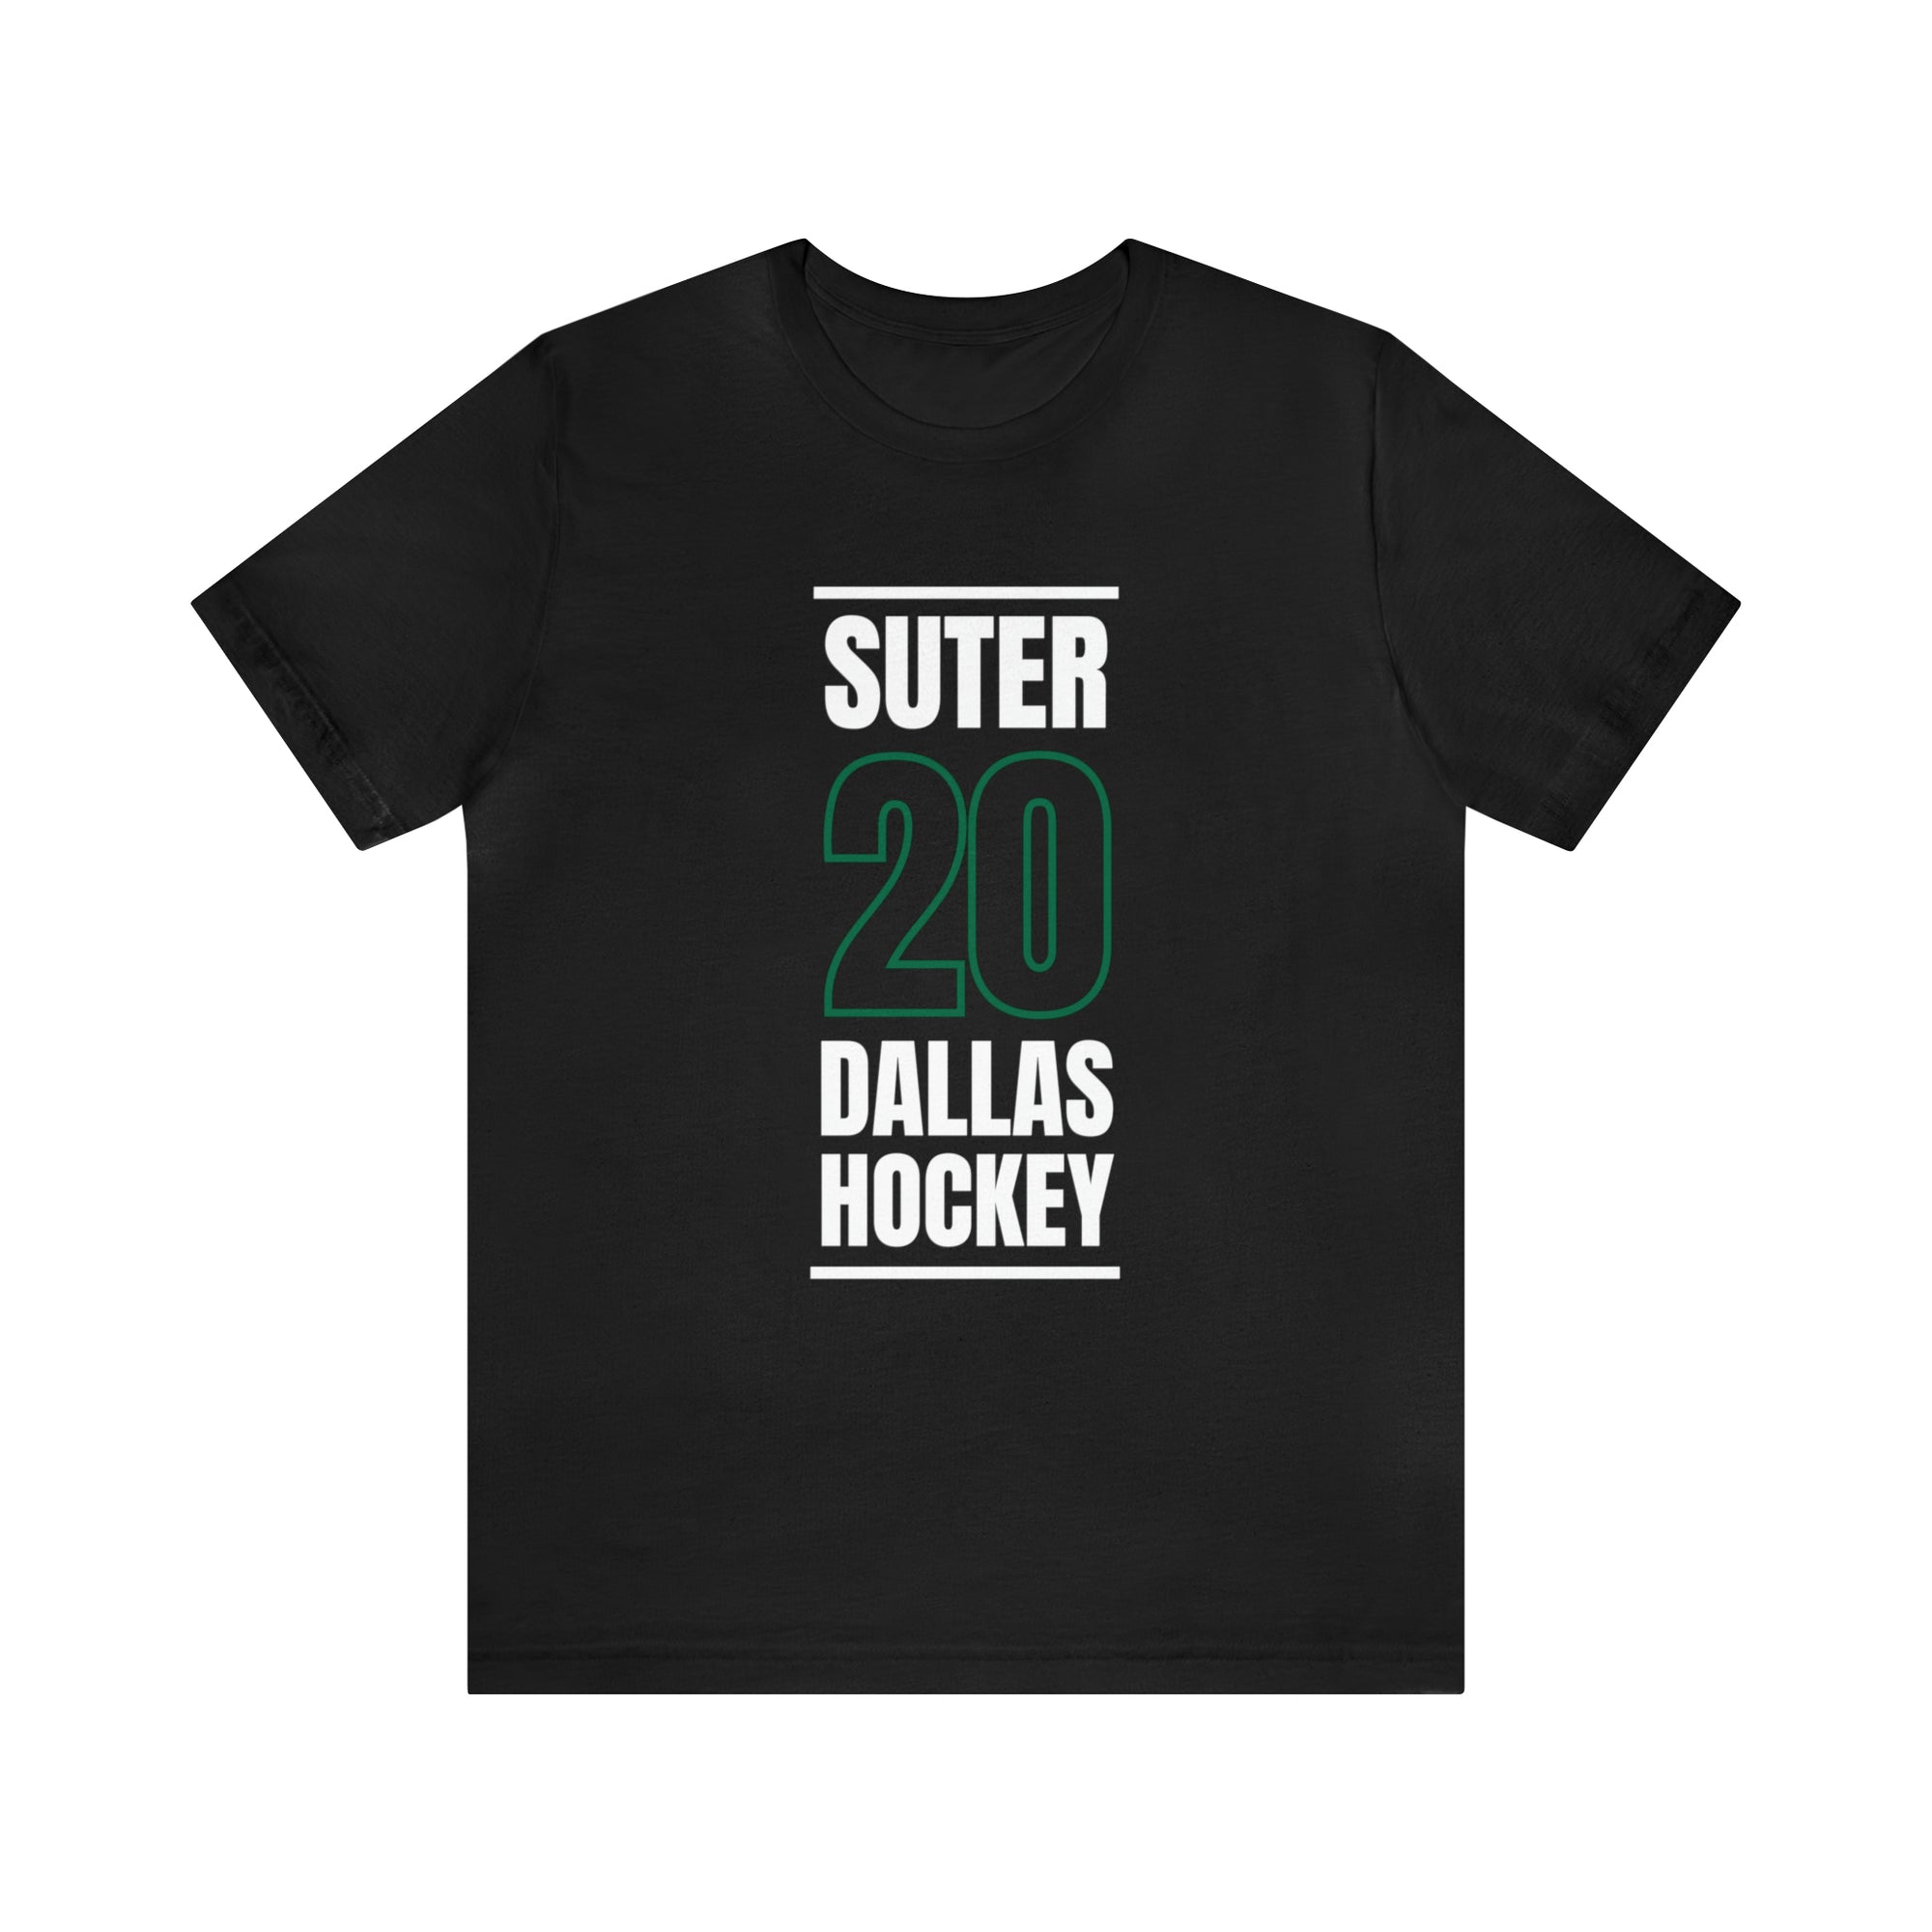 Suter 20 Dallas Hockey Black Vertical Design Unisex T-Shirt